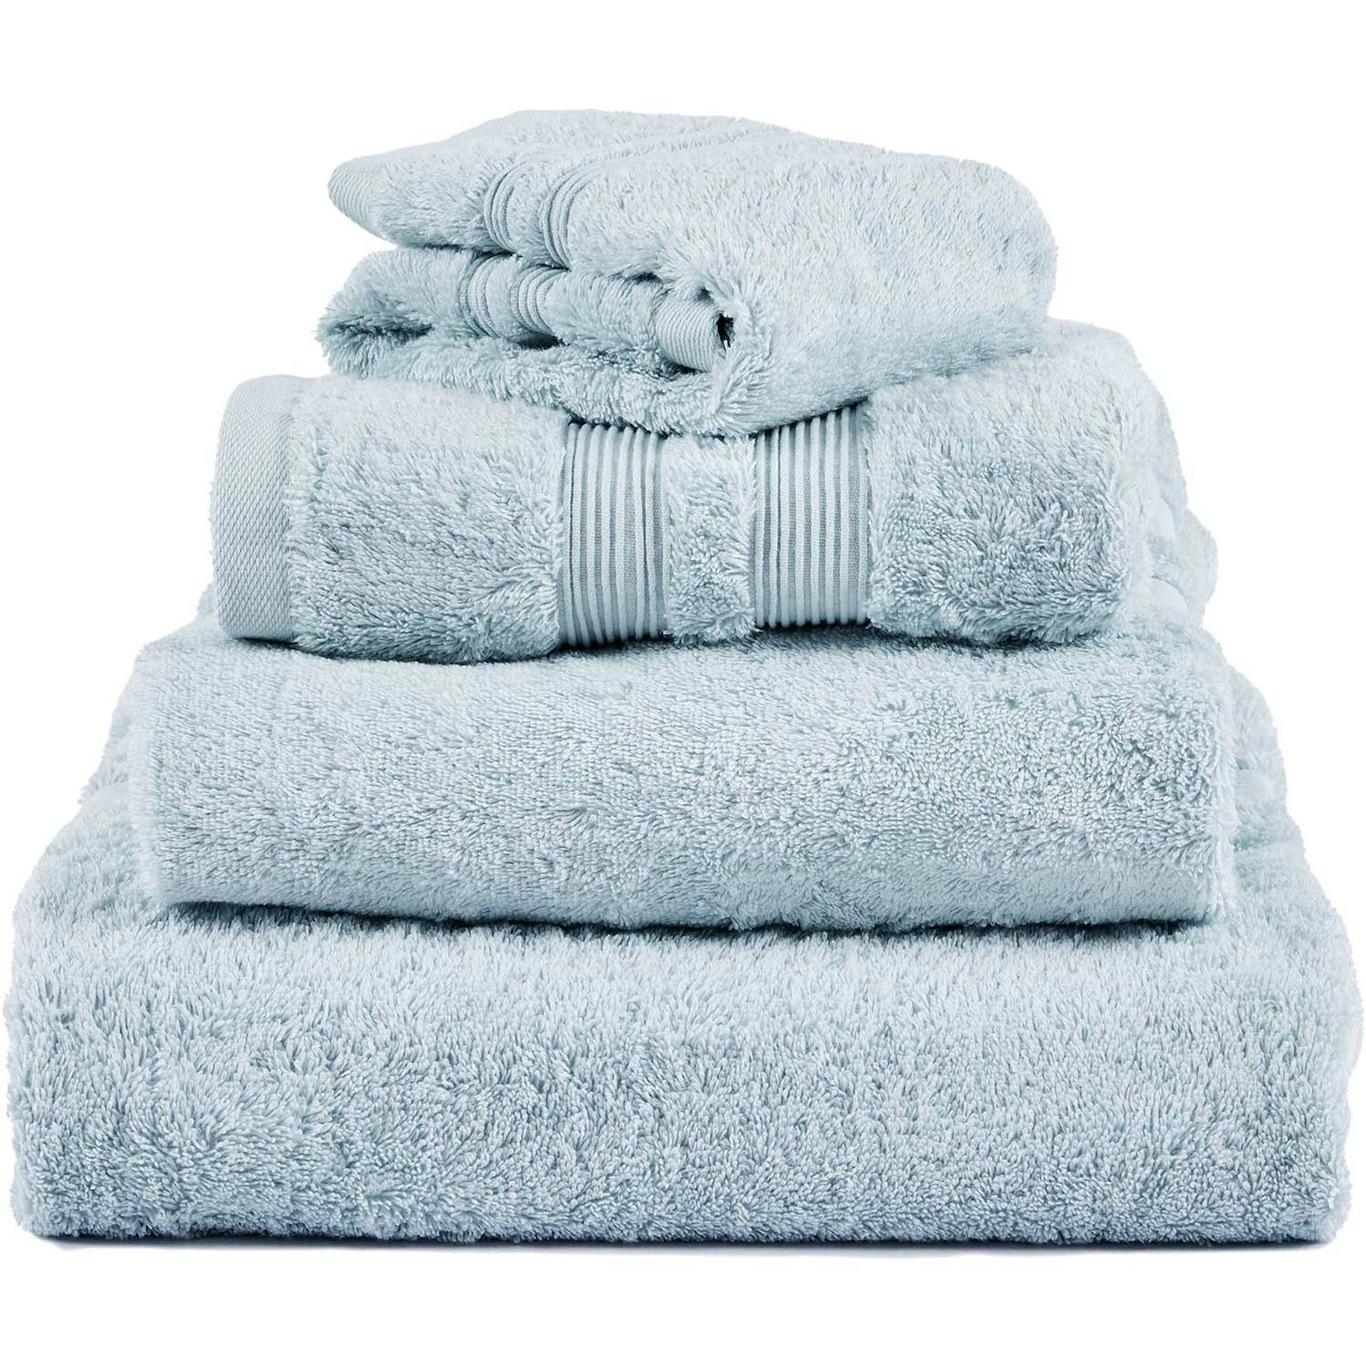 https://royaldesign.com/image/2/mille-notti-fontana-towel-eko-ice-blue-100x150cm-3?w=800&quality=80